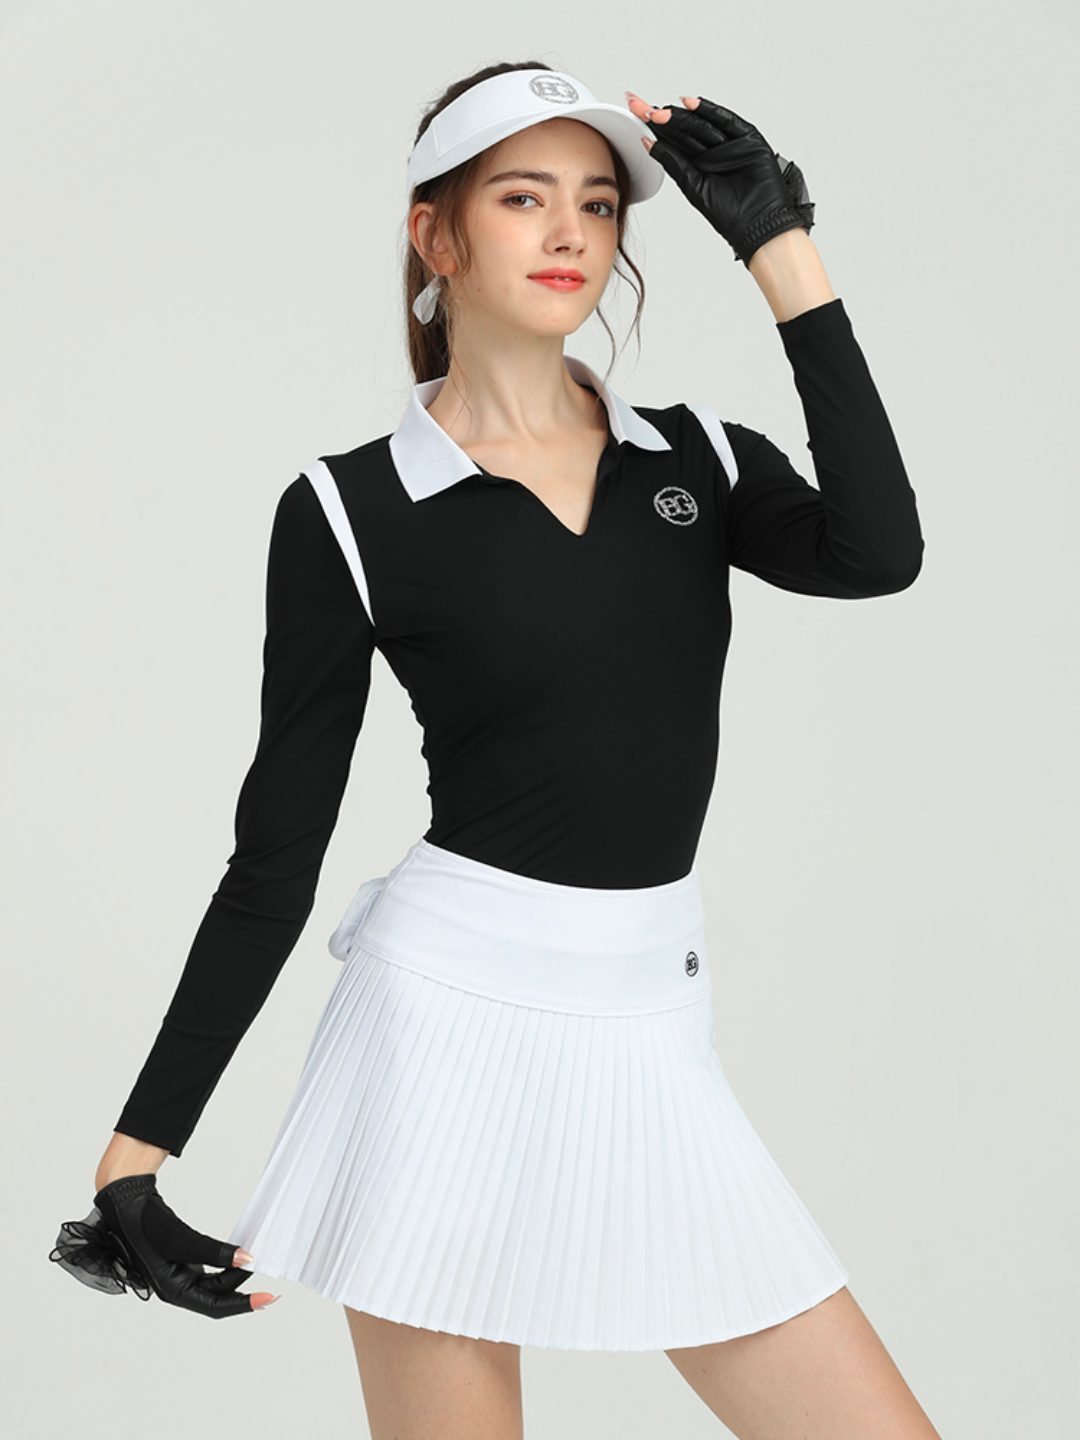 Pakaian golf elegan yang monoton ch013